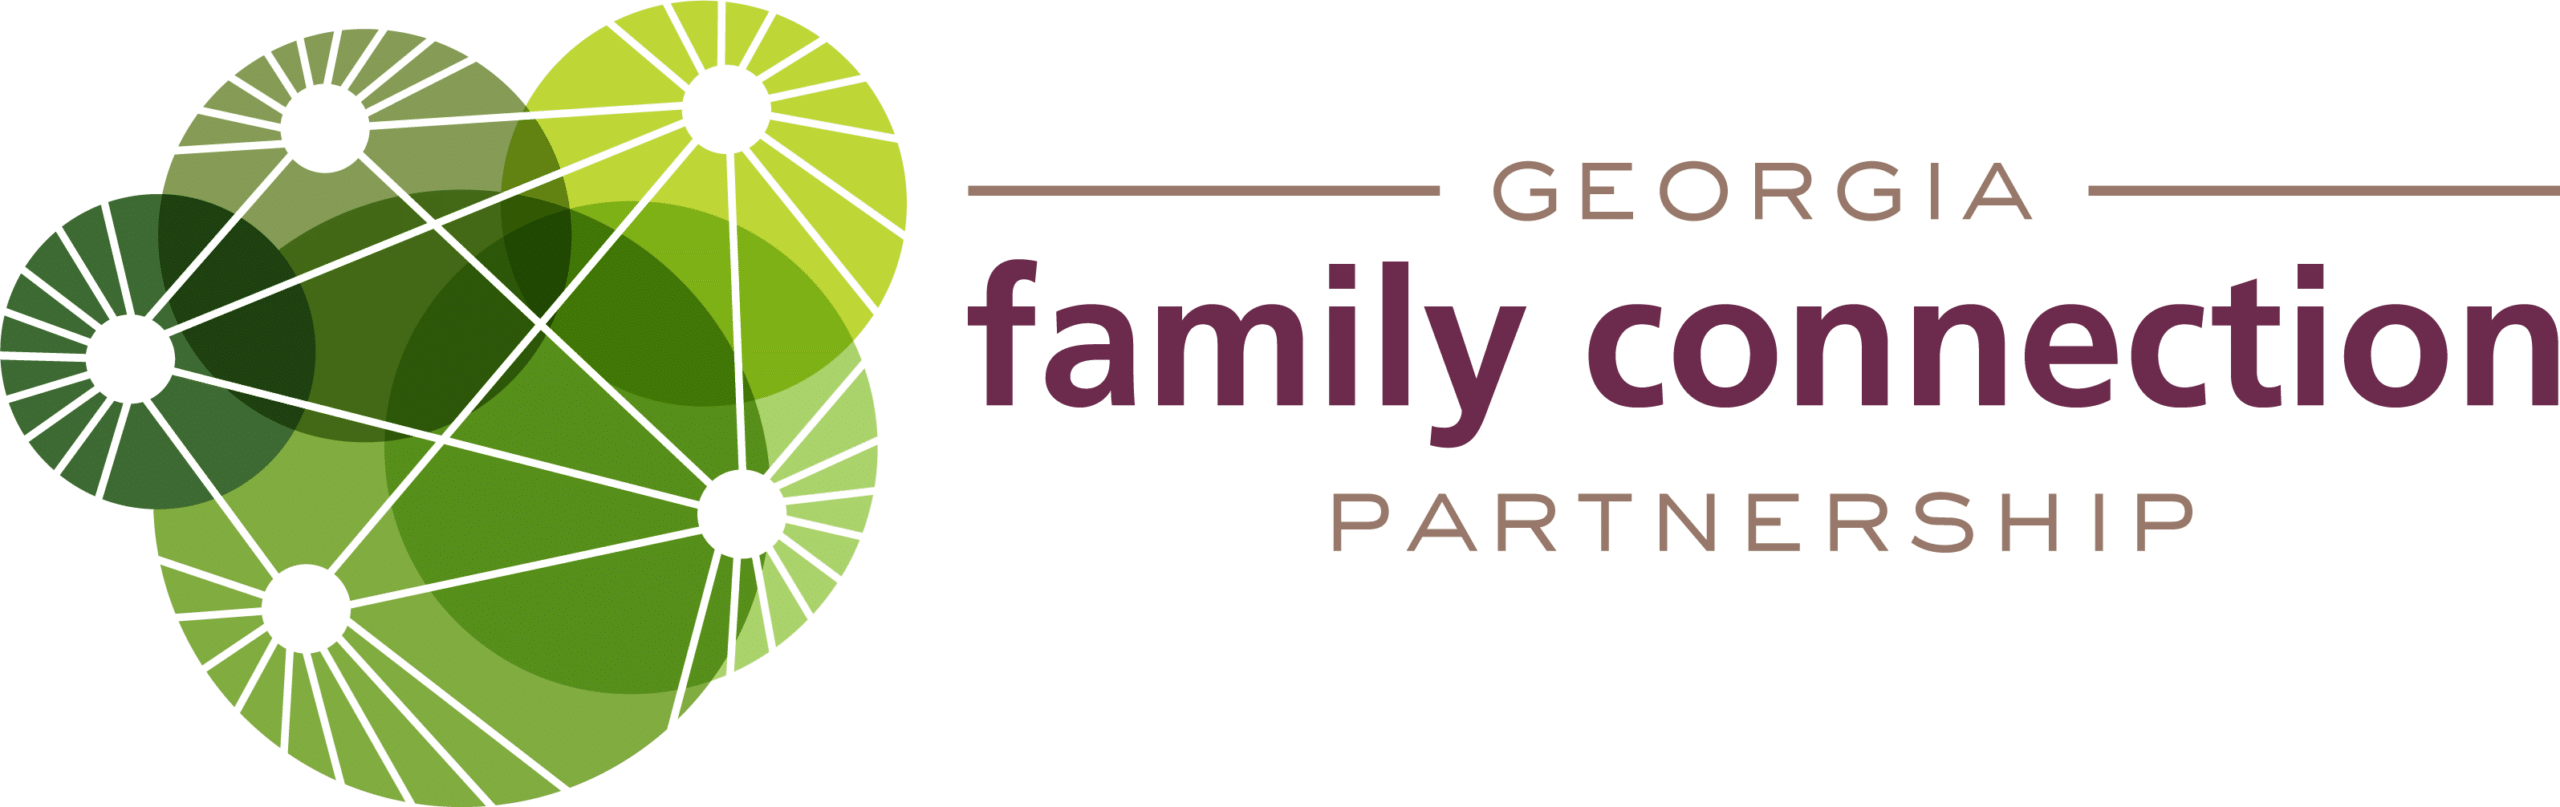 GA Family Connection Partnership logo